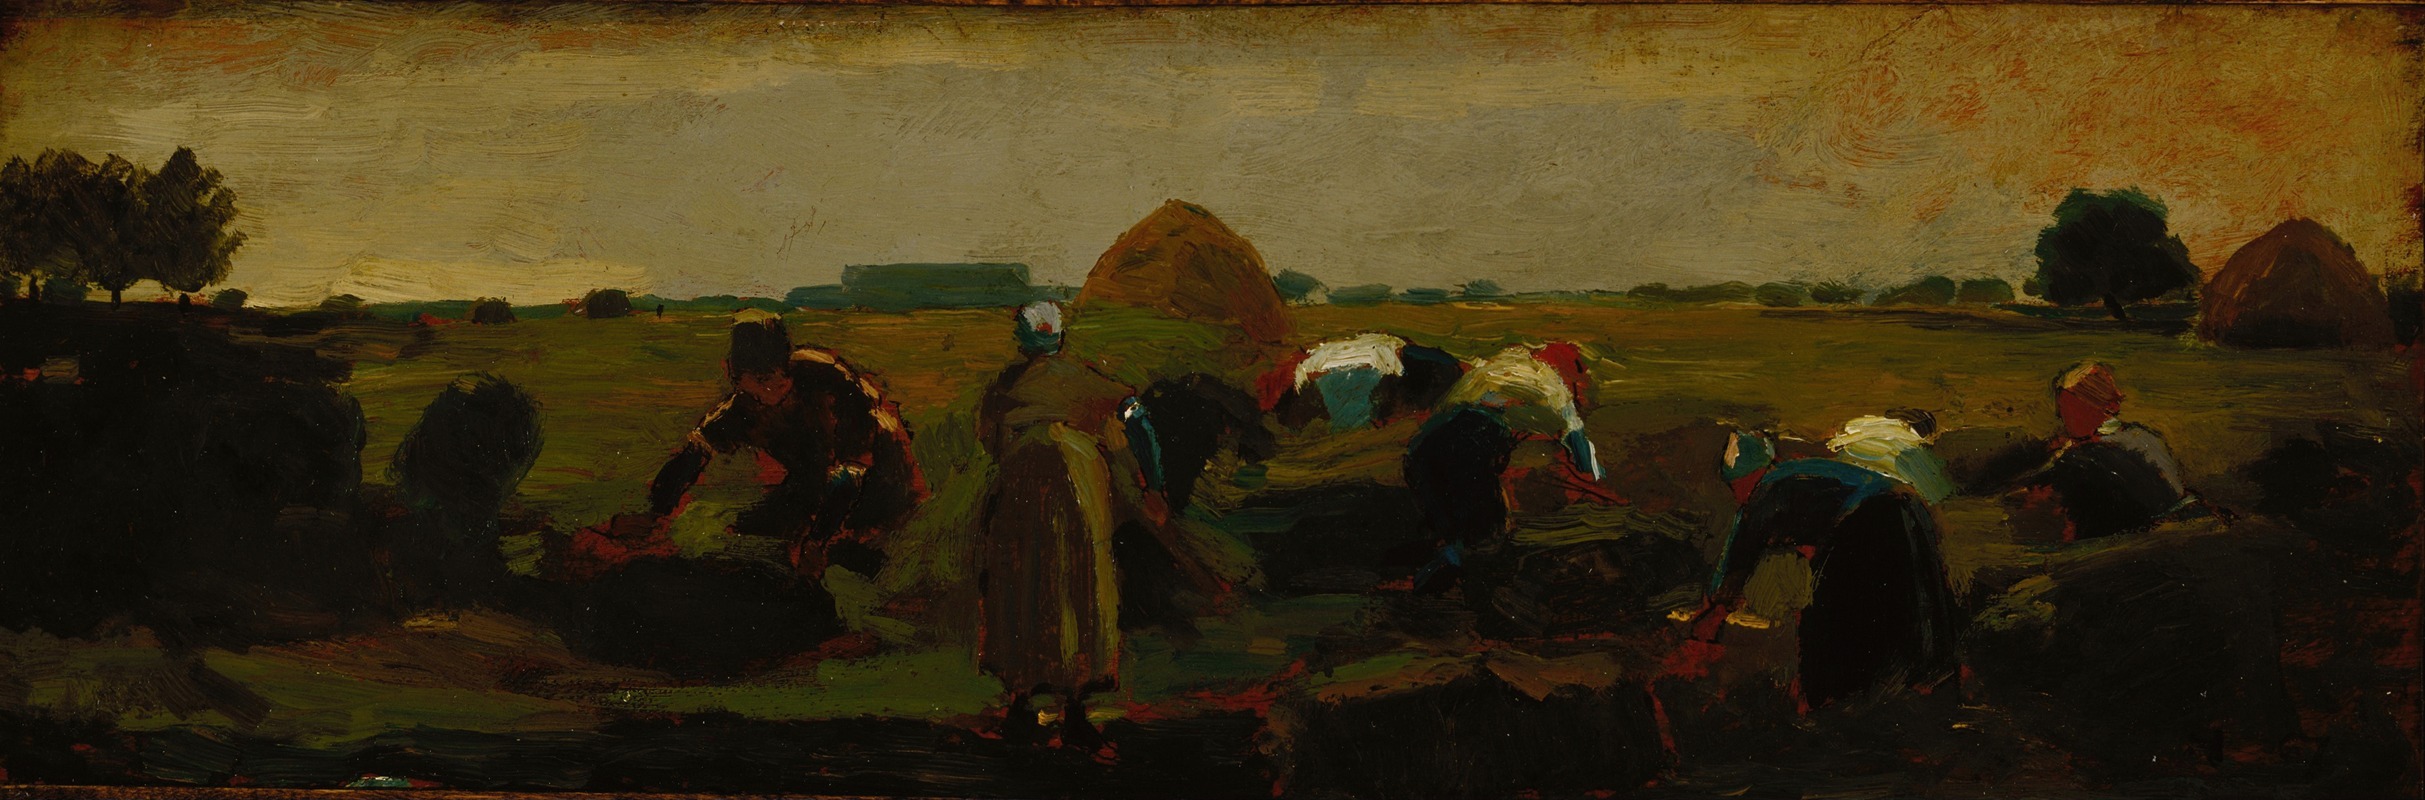 Winslow Homer - The Gleaners